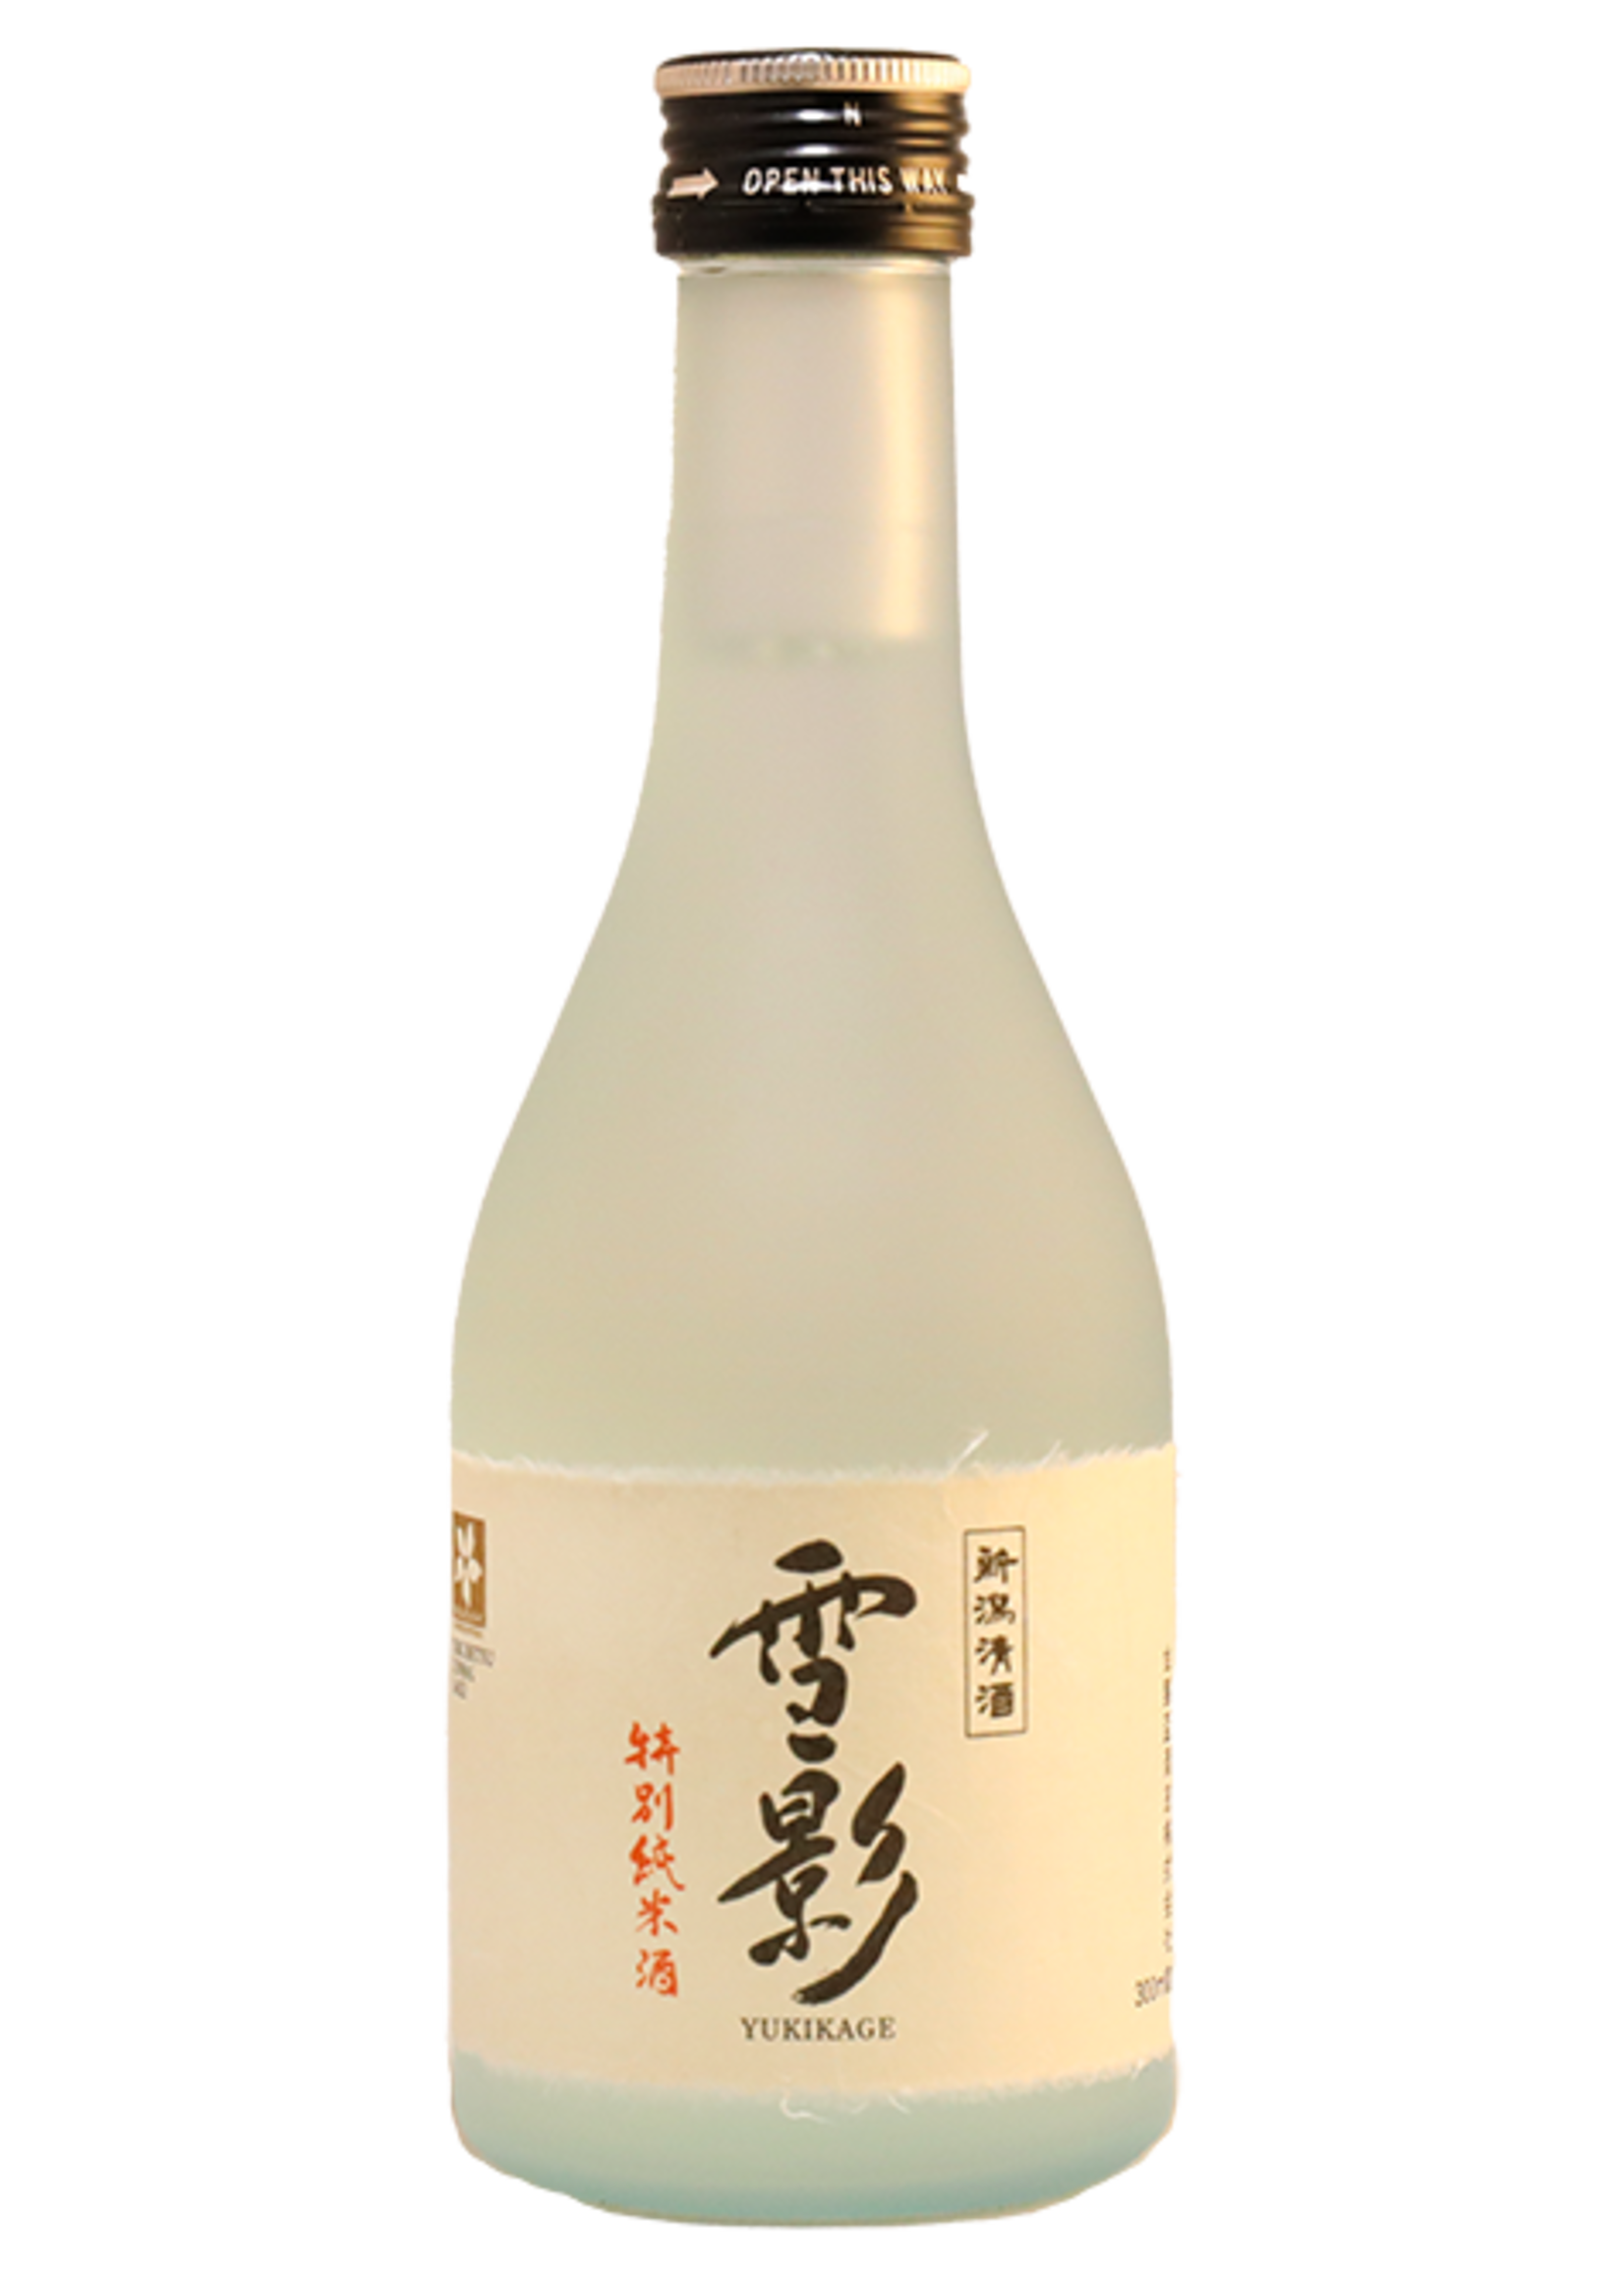 Yukikage Snow Shadow Tokubetsu Junmai NV Kinshishai Brewery (300 ml)